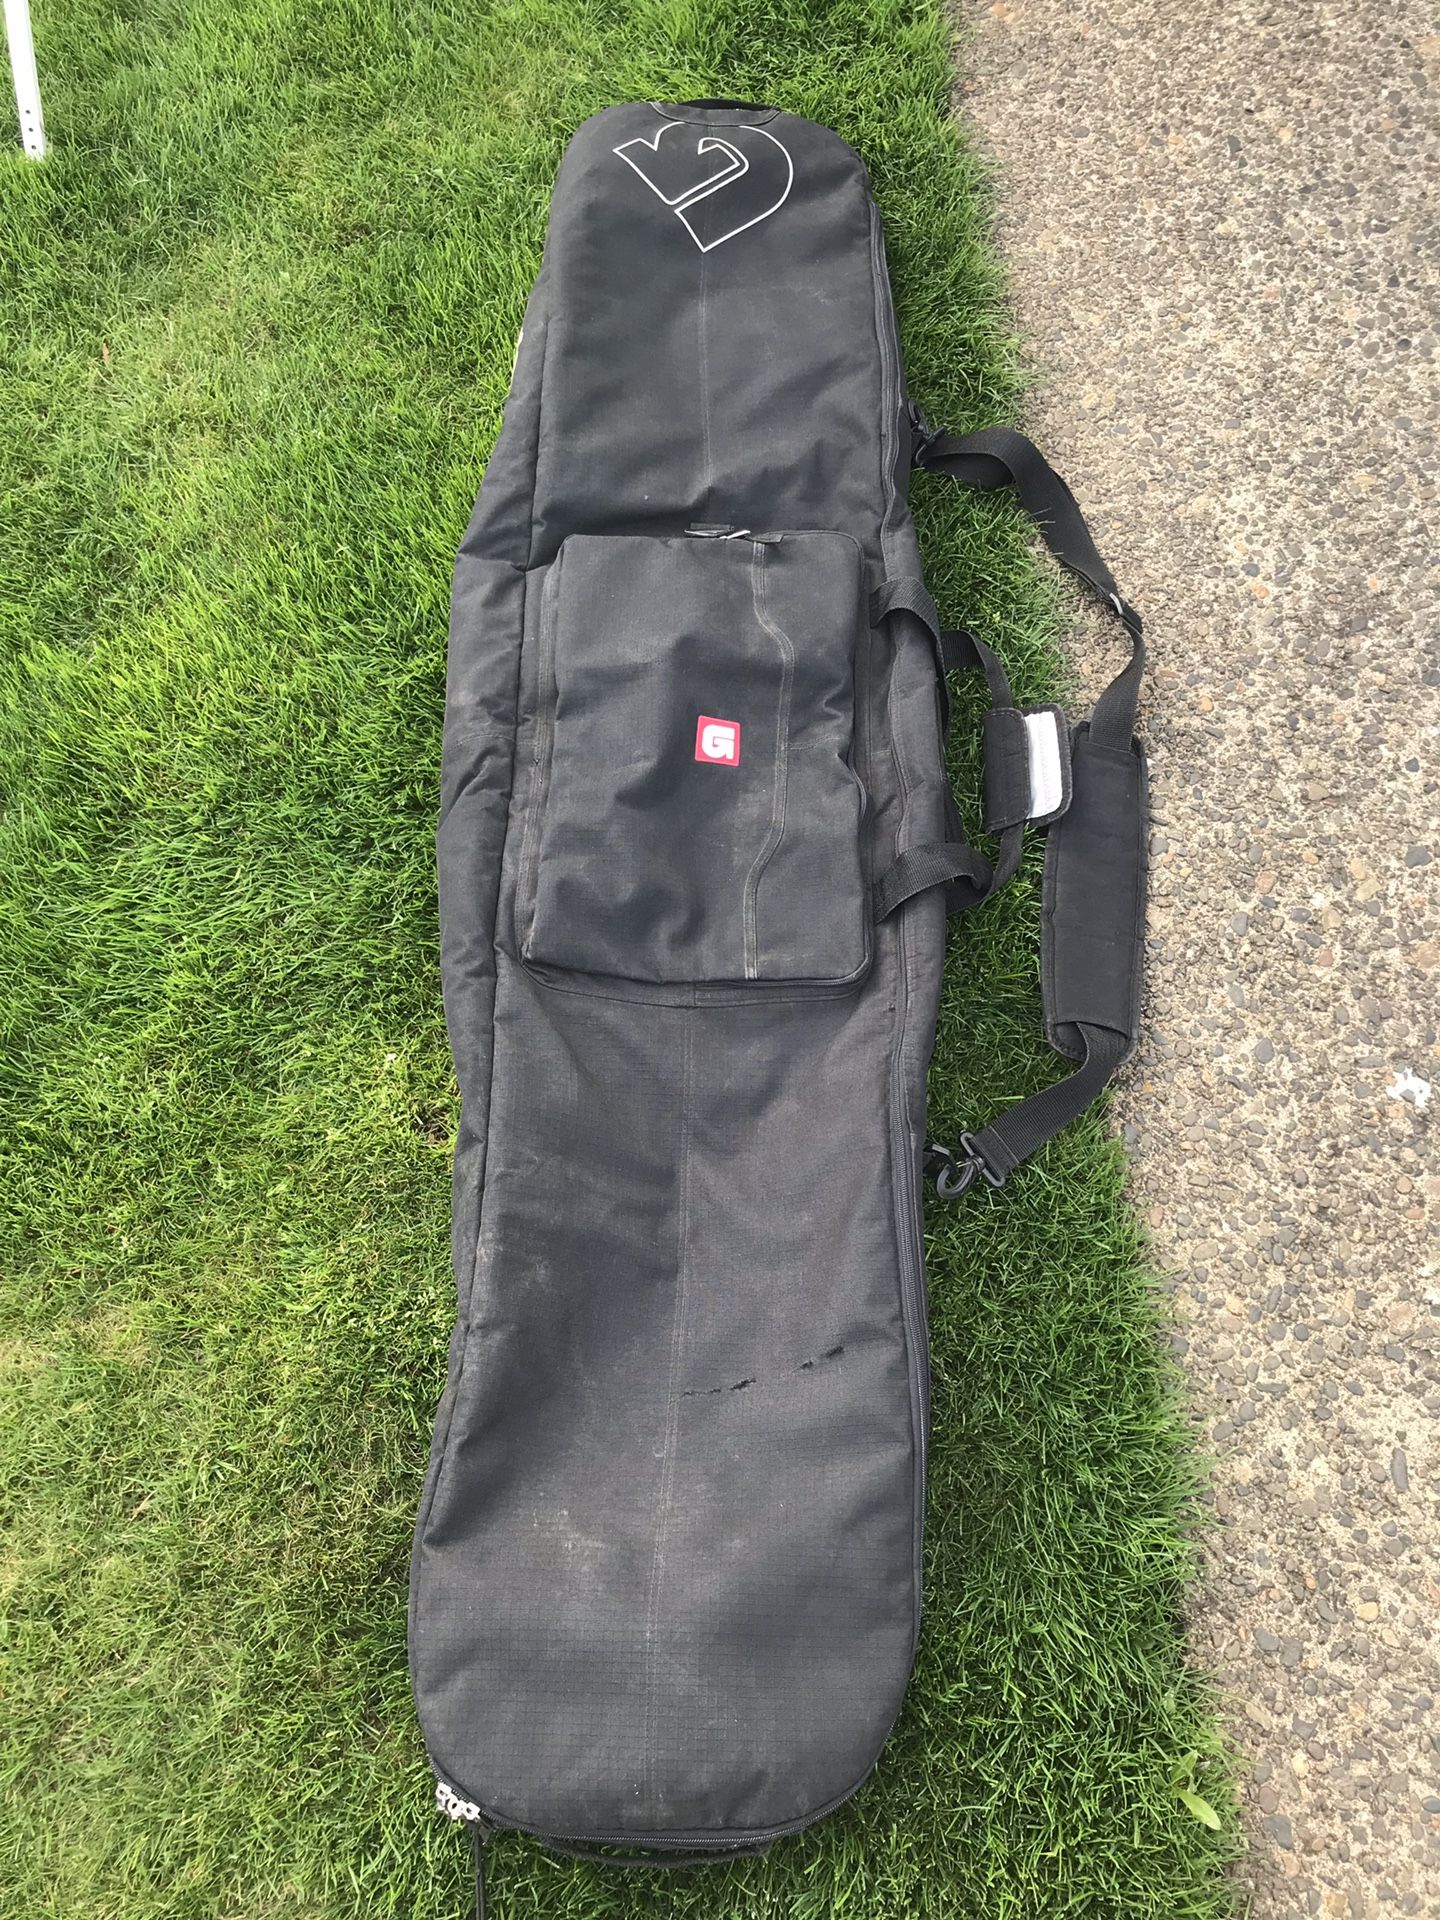 Burton snowboard bag 166cm length